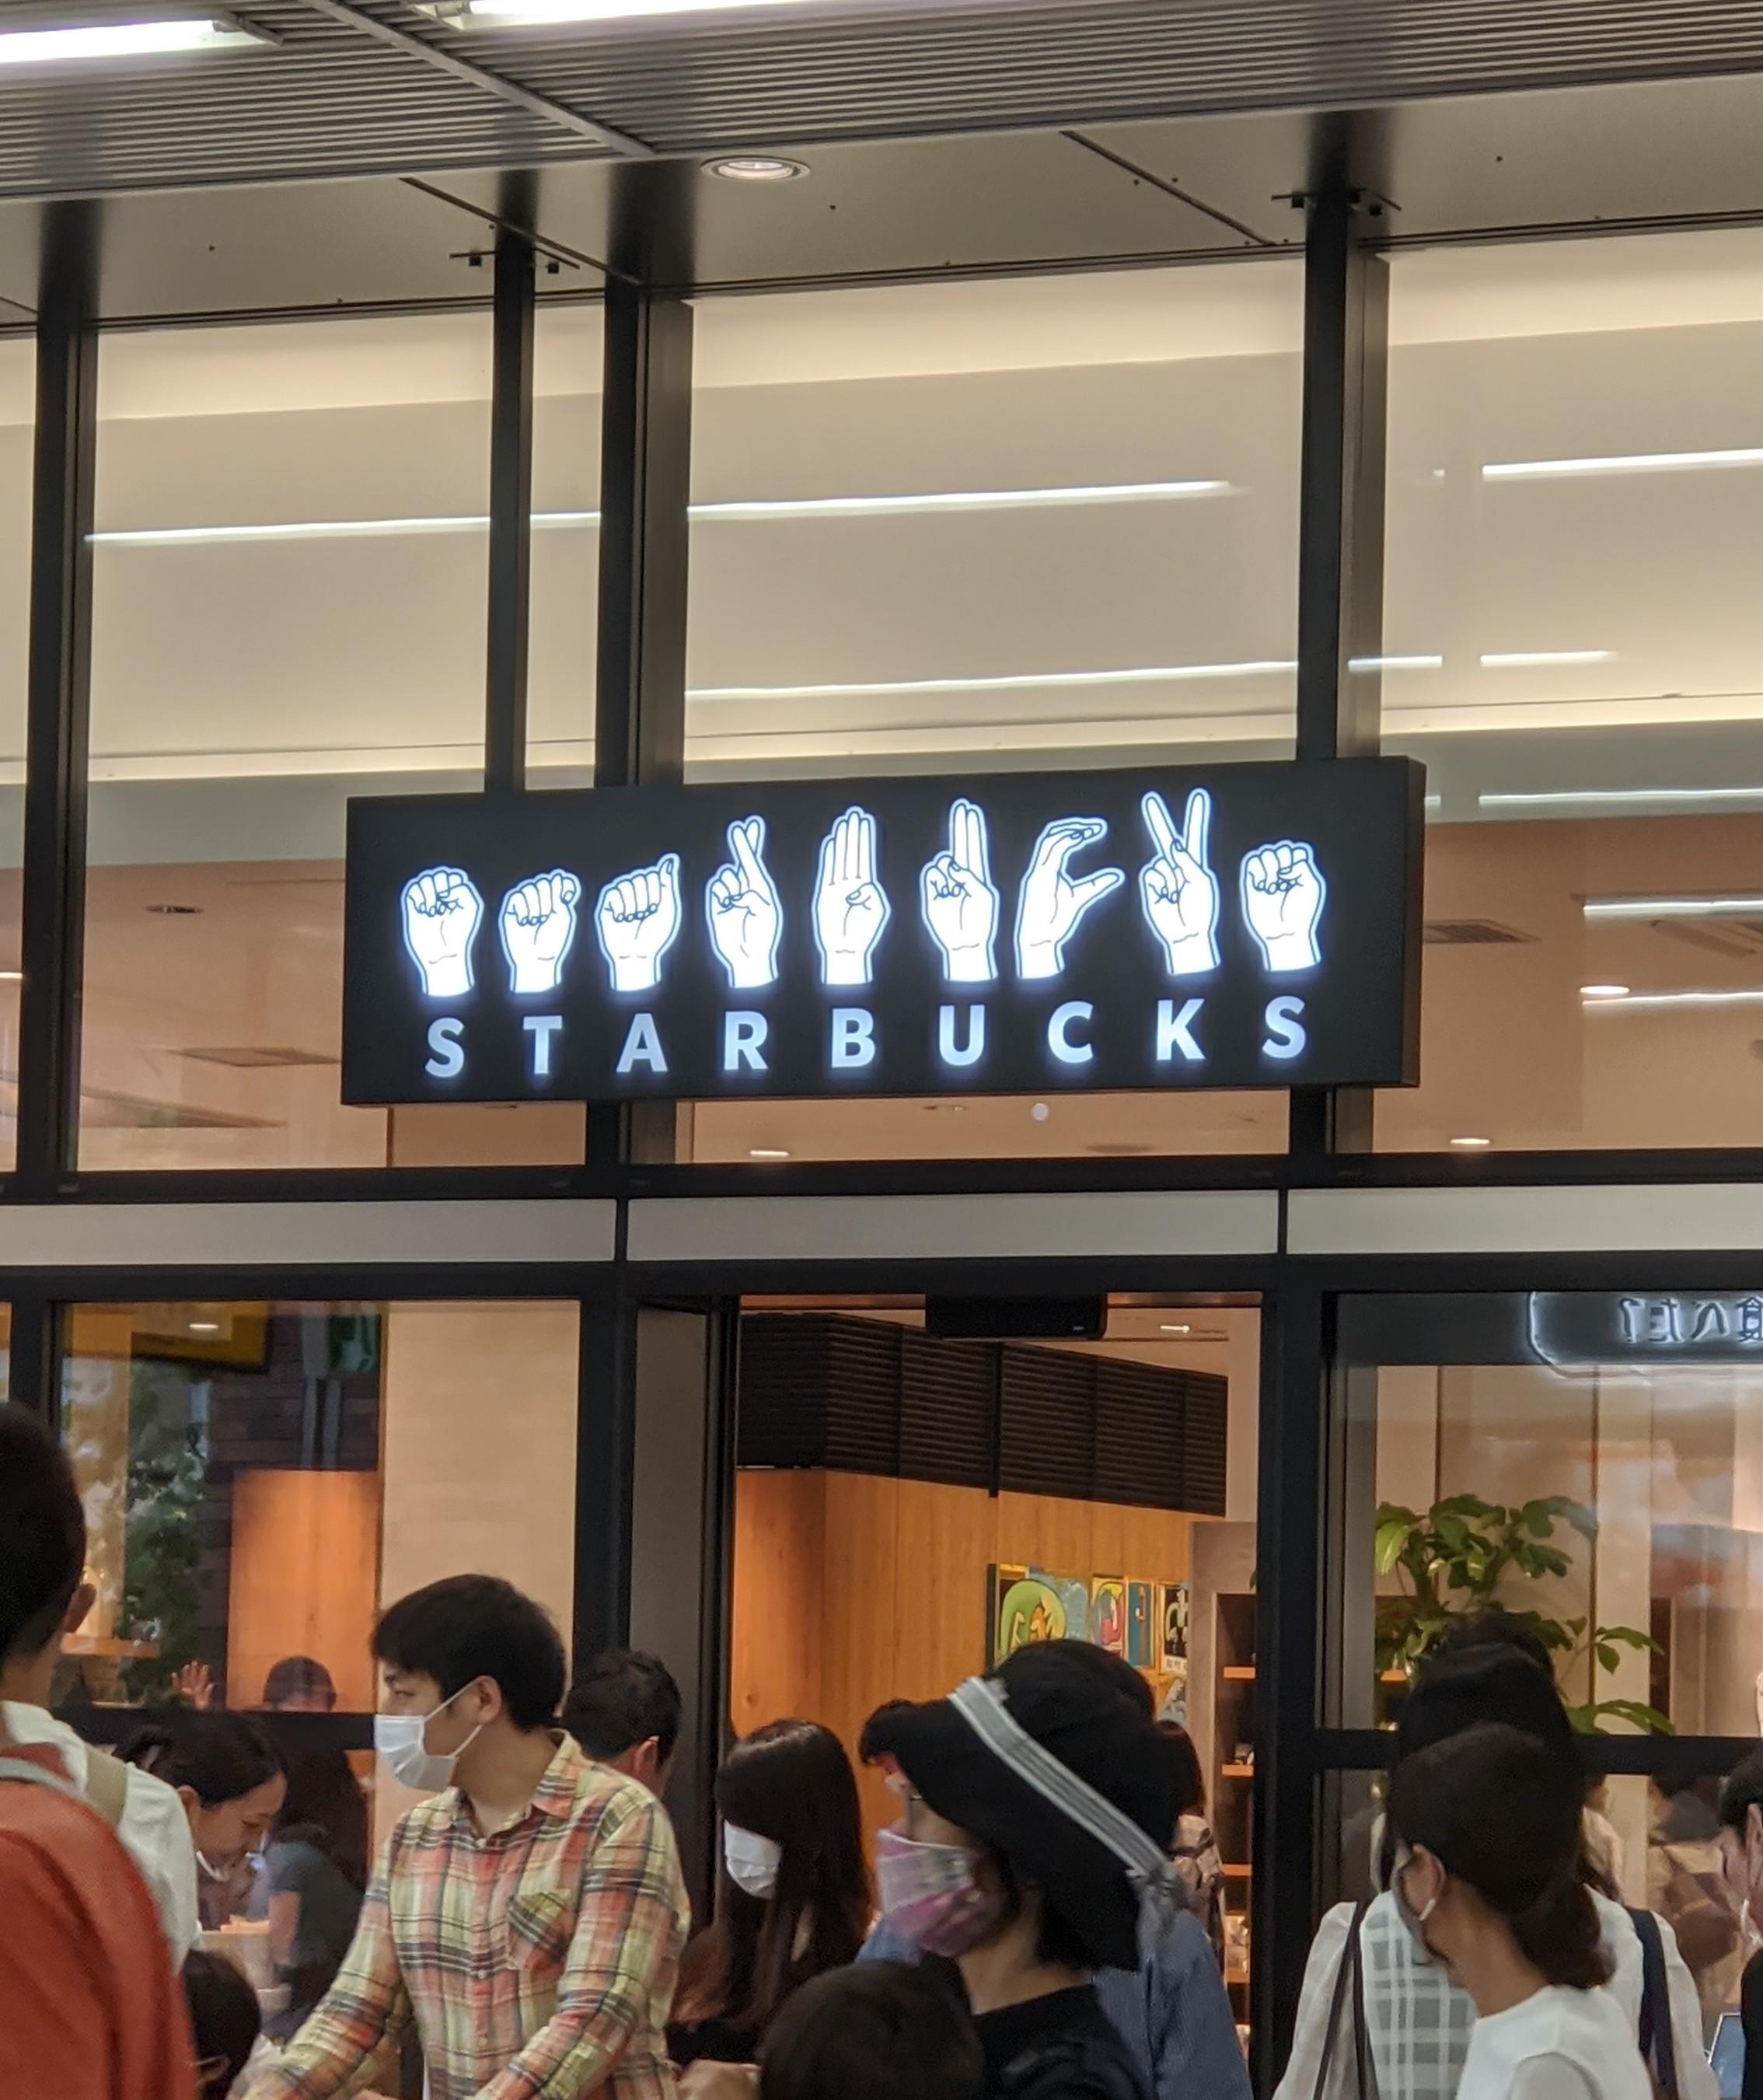 Japan has a sign language Starbucks, apparently. 